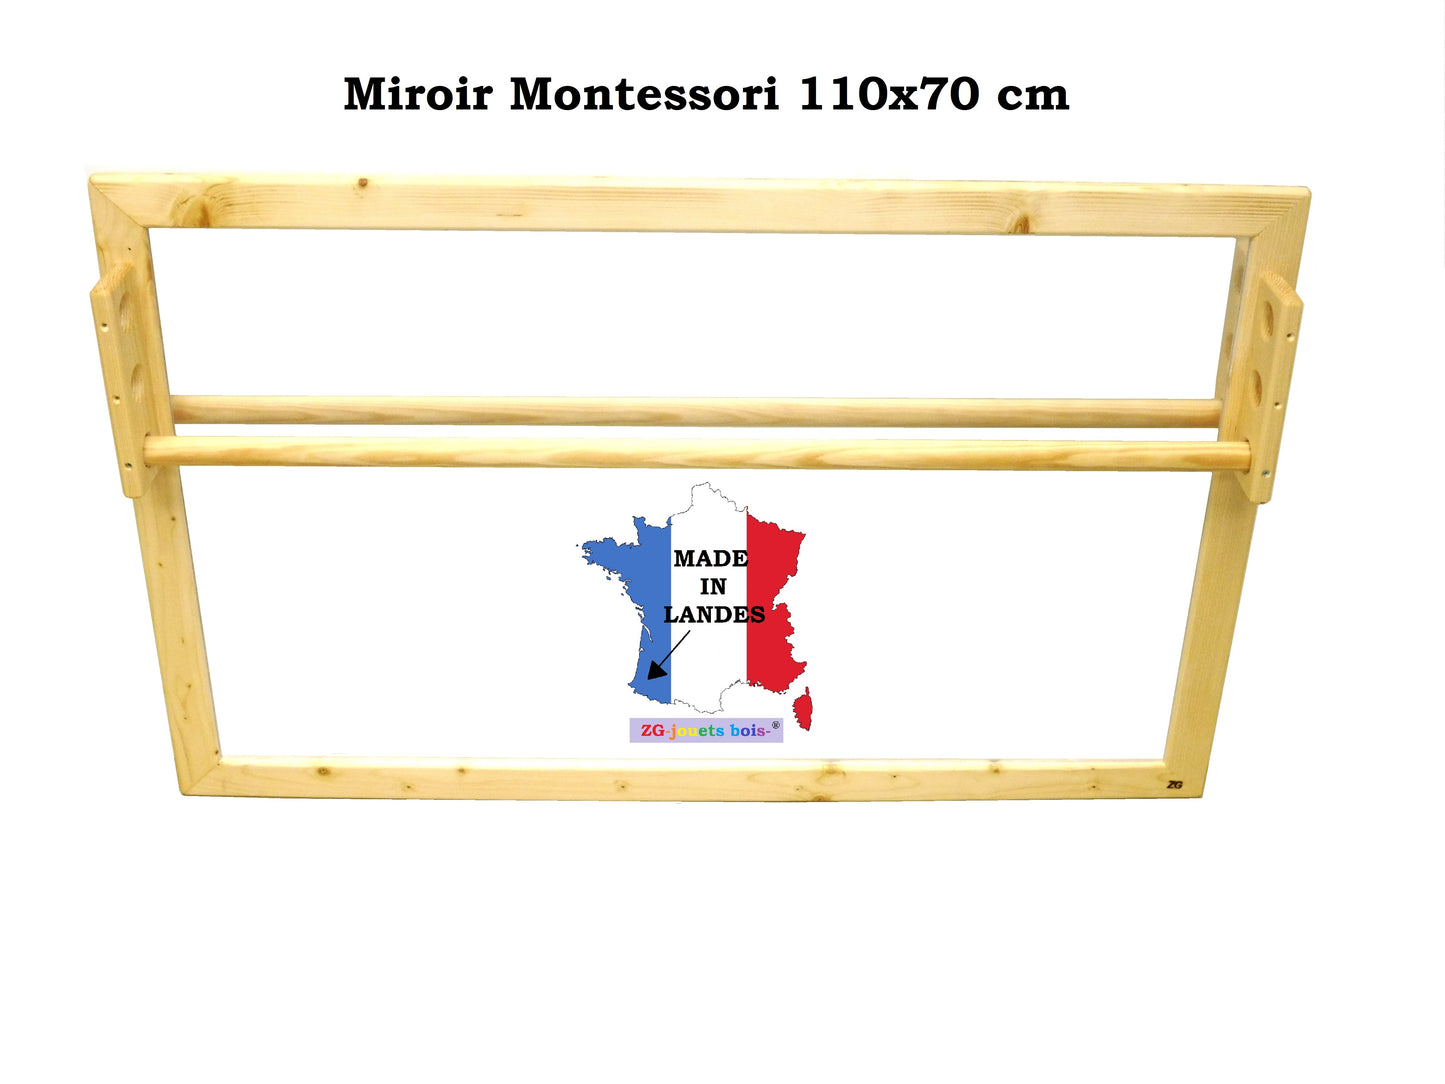 Montessori mirror 110x70 cm with brachiation bar